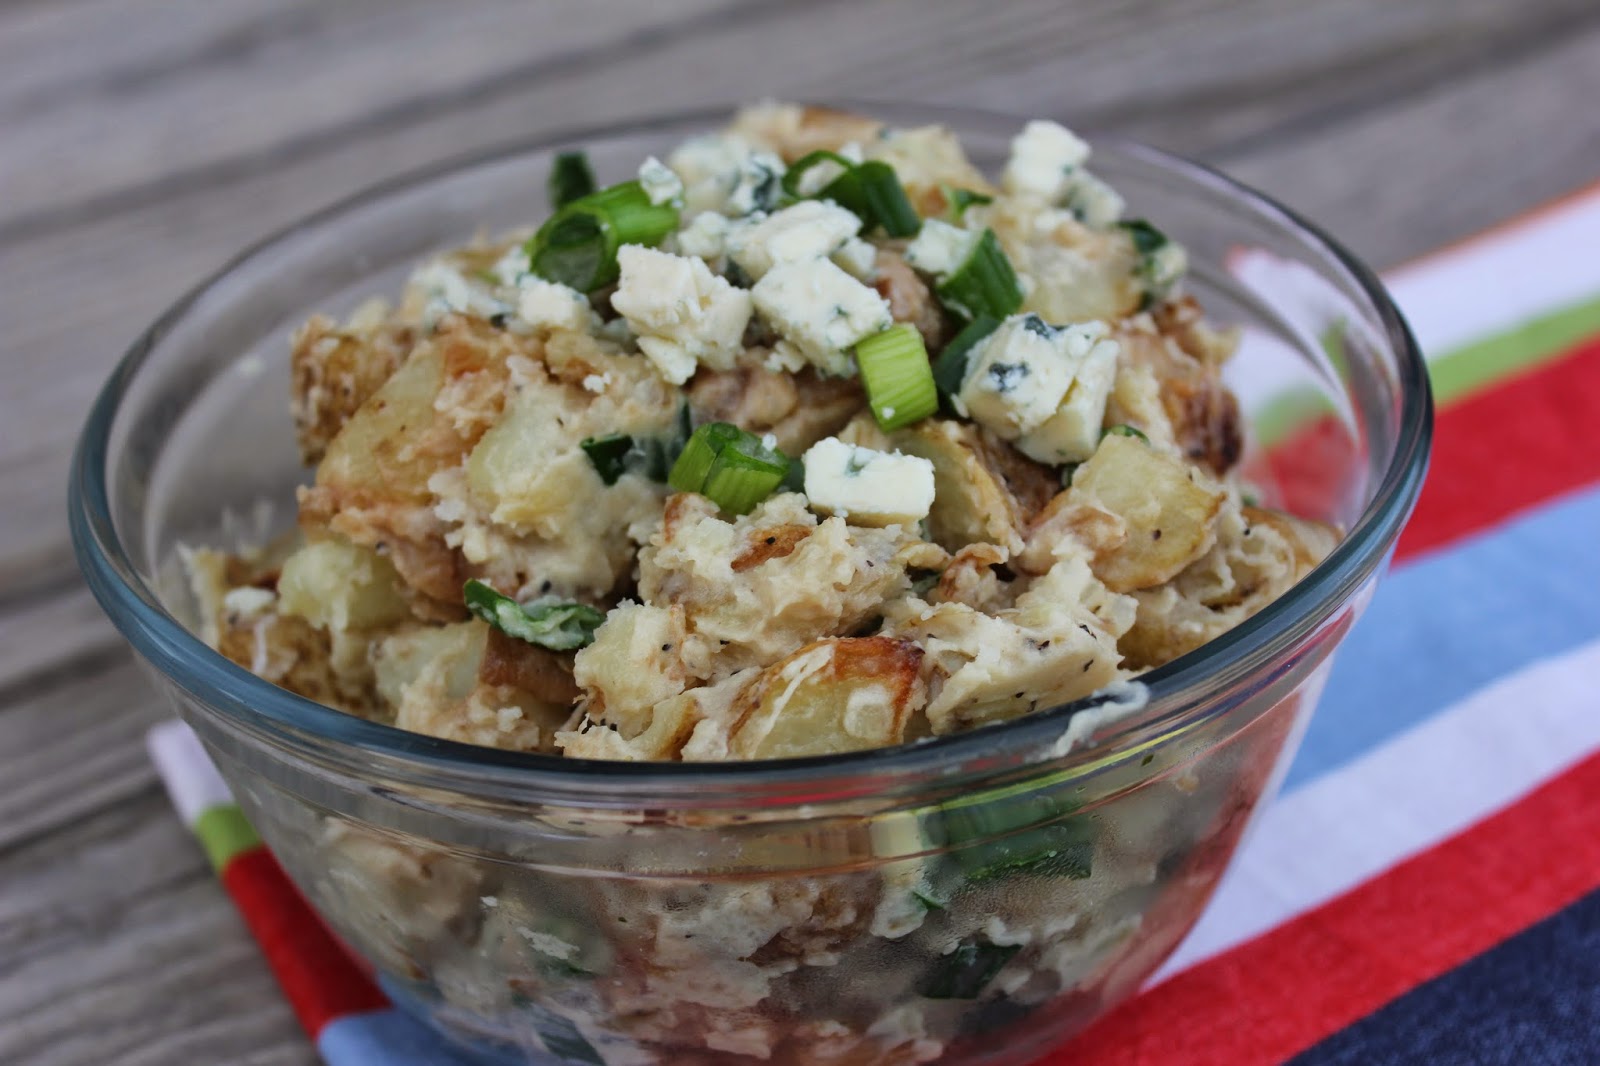 Recipe: Salad, Recipe: Side Dishes, summer bbq's, summer salads, potato salad, blue cheese, warm potato salad, Blue Cheese Potato Salad